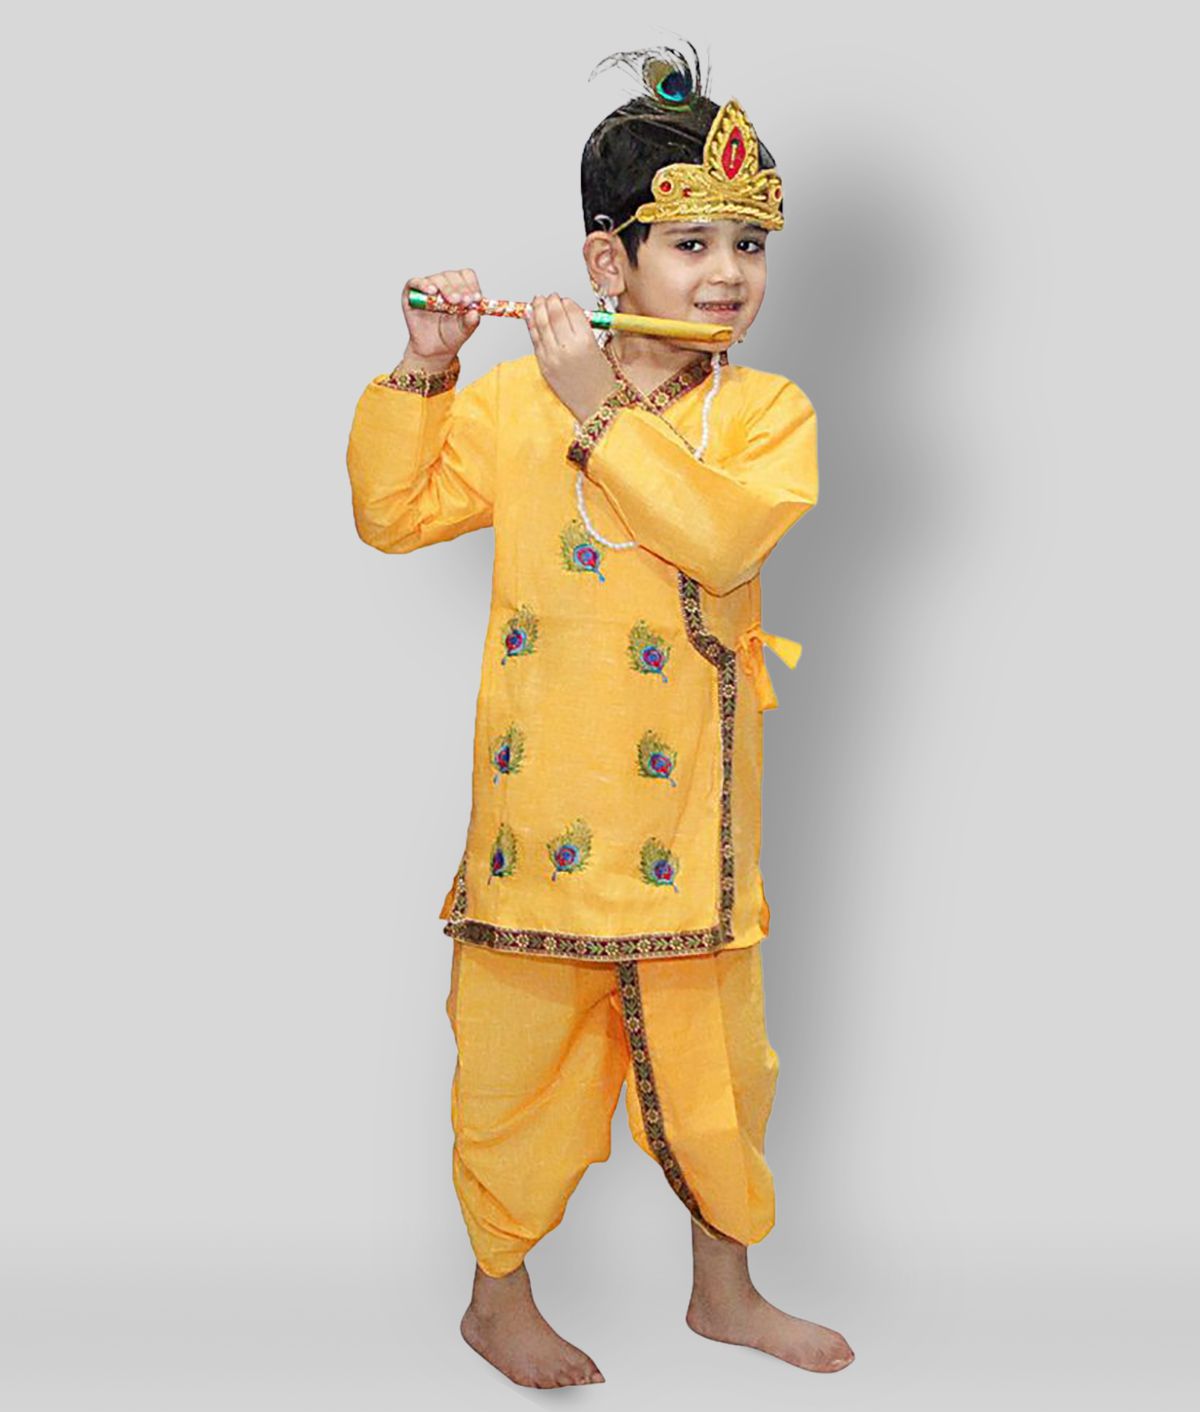     			Kaku Fancy Dresses Krishna Costume for Kids | Kids Krishna Dress for Janmashtami/ Kanha/ Krishnaleela/ Mythological Character Krishna Fancy Dress Costume for Boys/Girls - Yellow (2-3 Years)